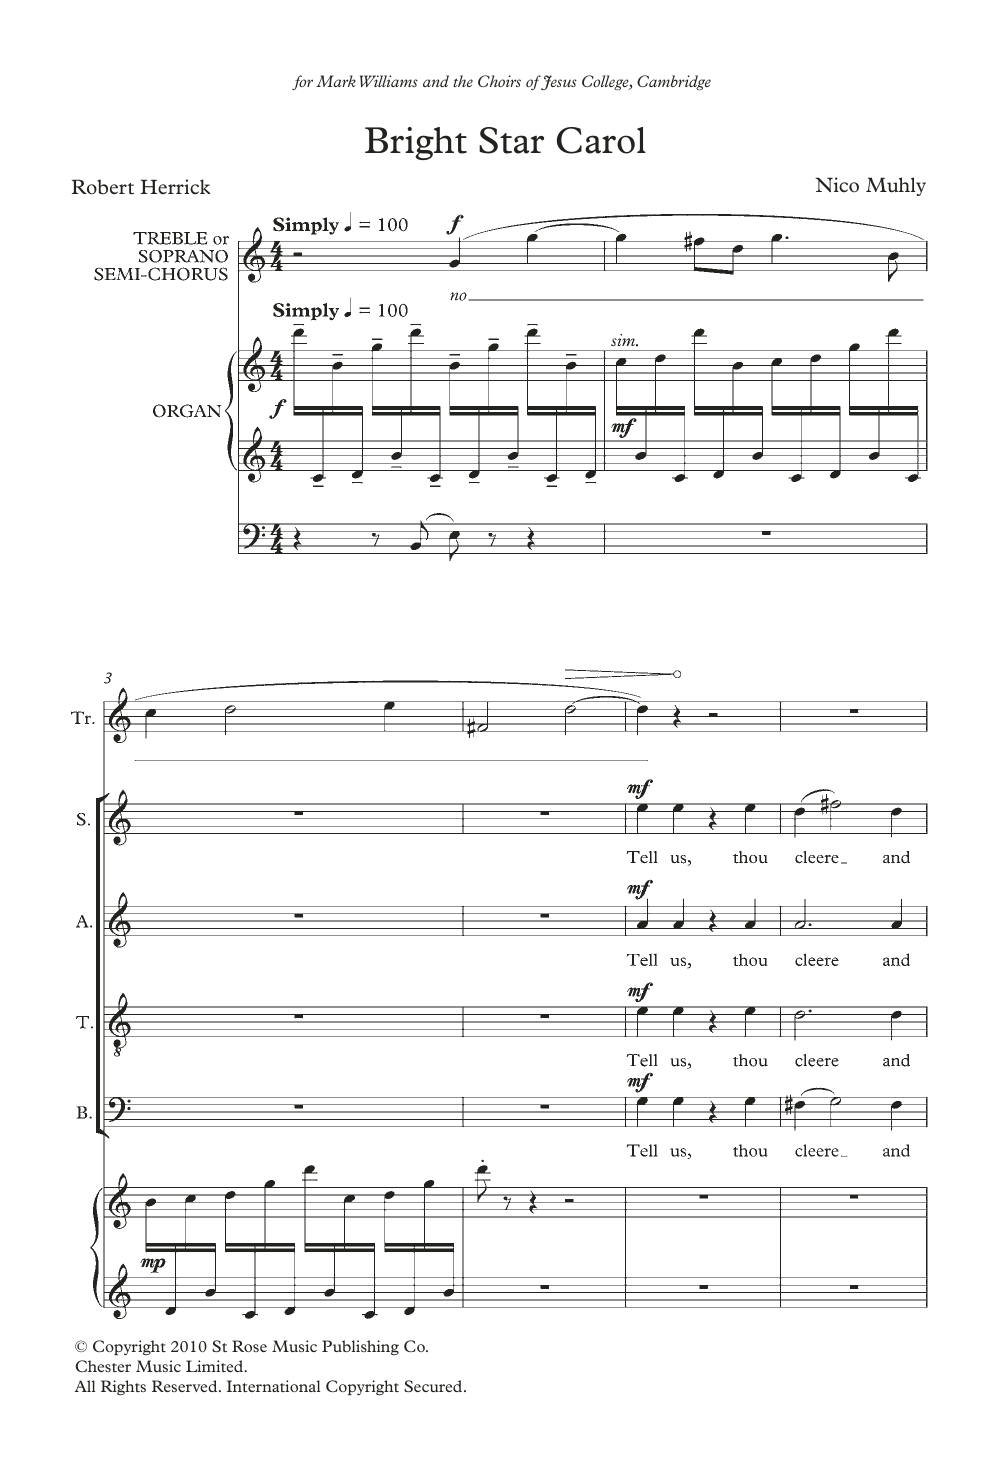 Nico Muhly Bright Star Carol Sheet Music Notes & Chords for Choir - Download or Print PDF